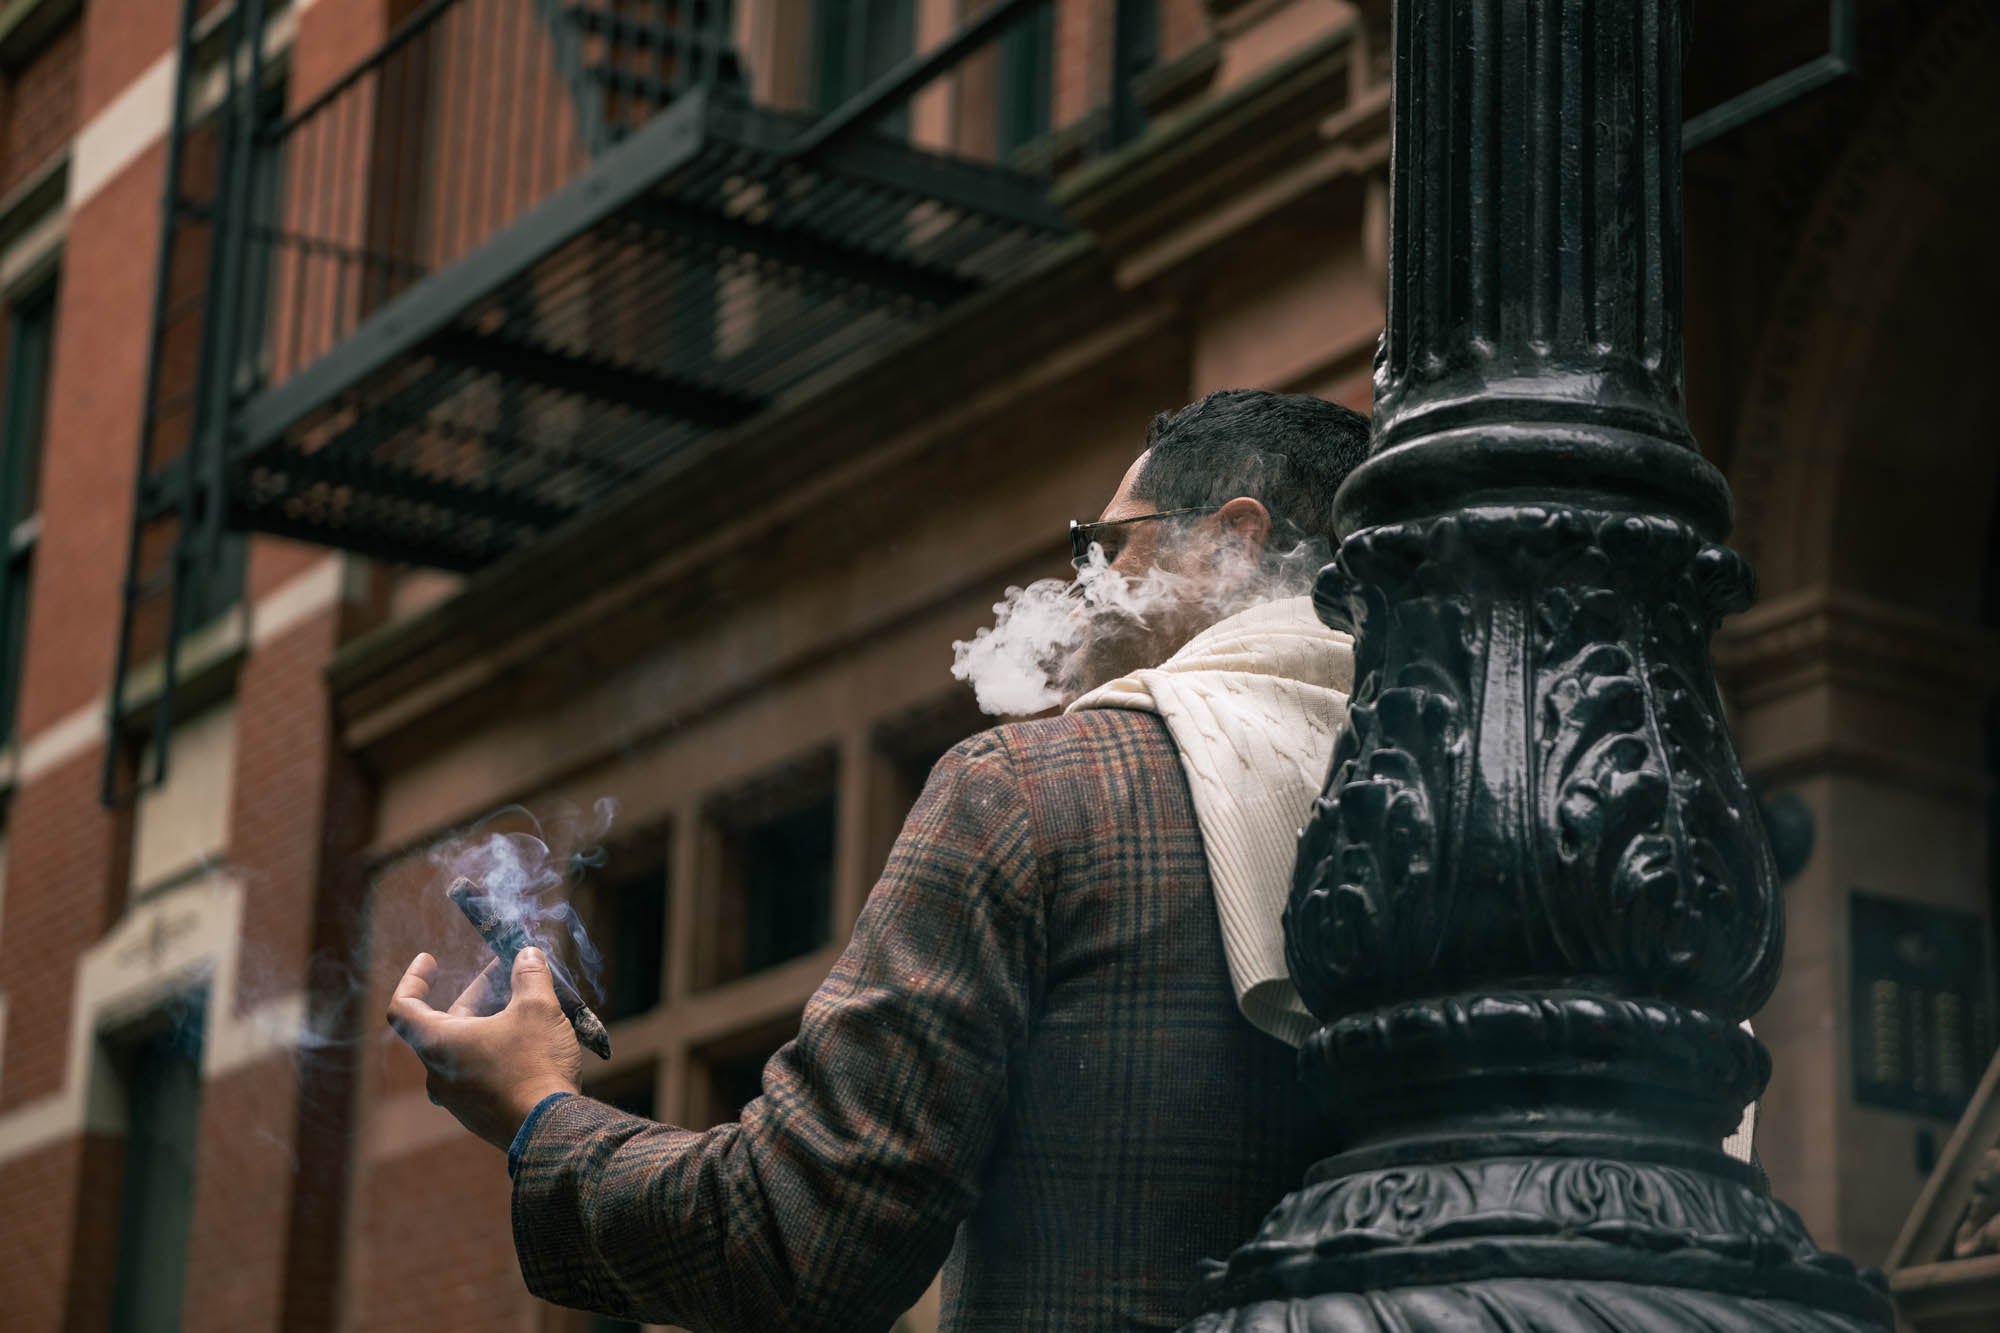 Angel Ramos smoking a Plasencia cigar in New York City